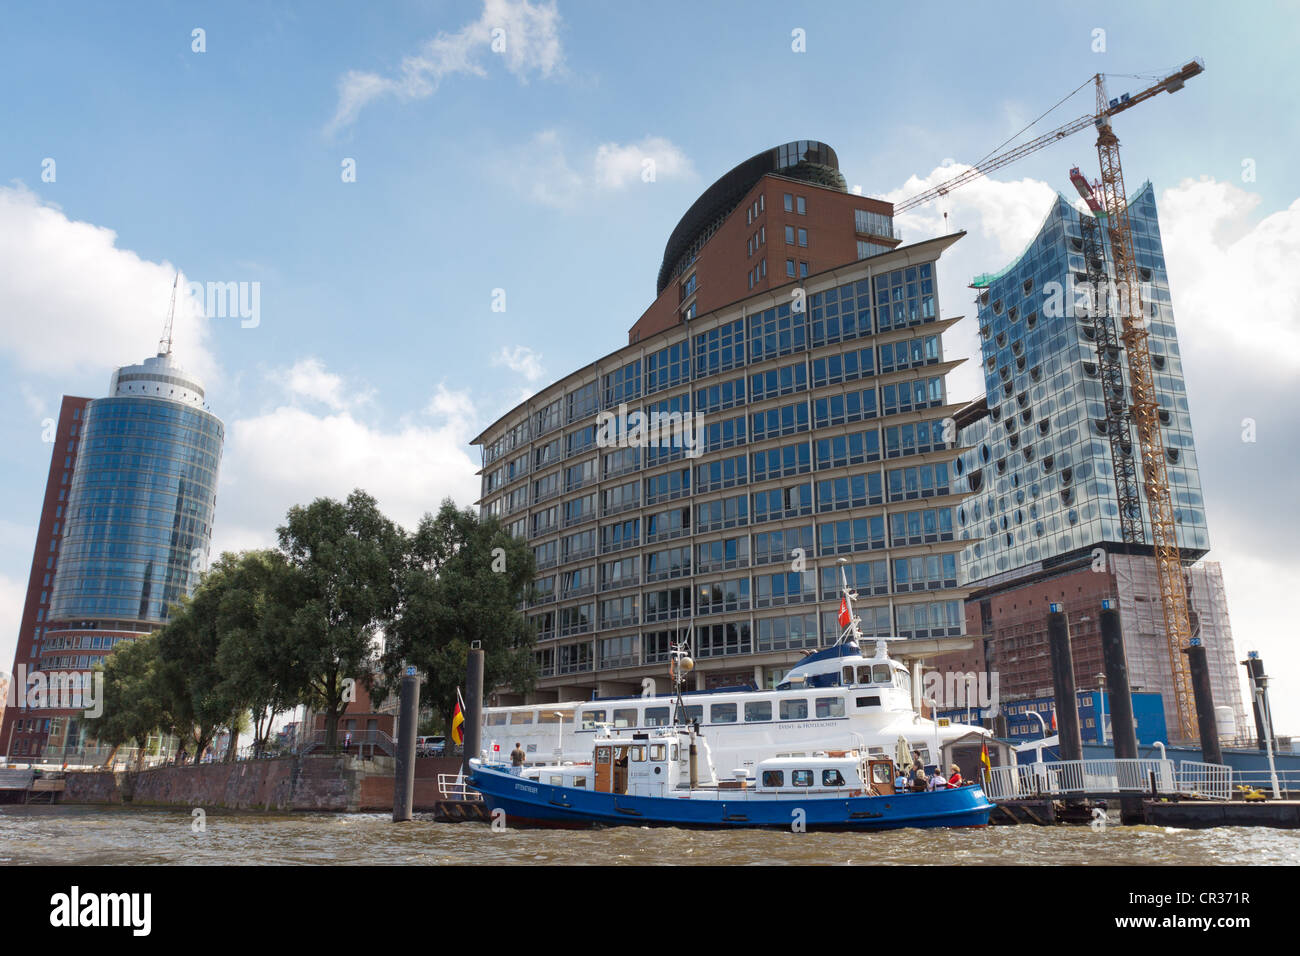 Elbphilharmonie Hamburg concert hall vista dal fiume Elba, Amburgo, Germania, Europa Foto Stock